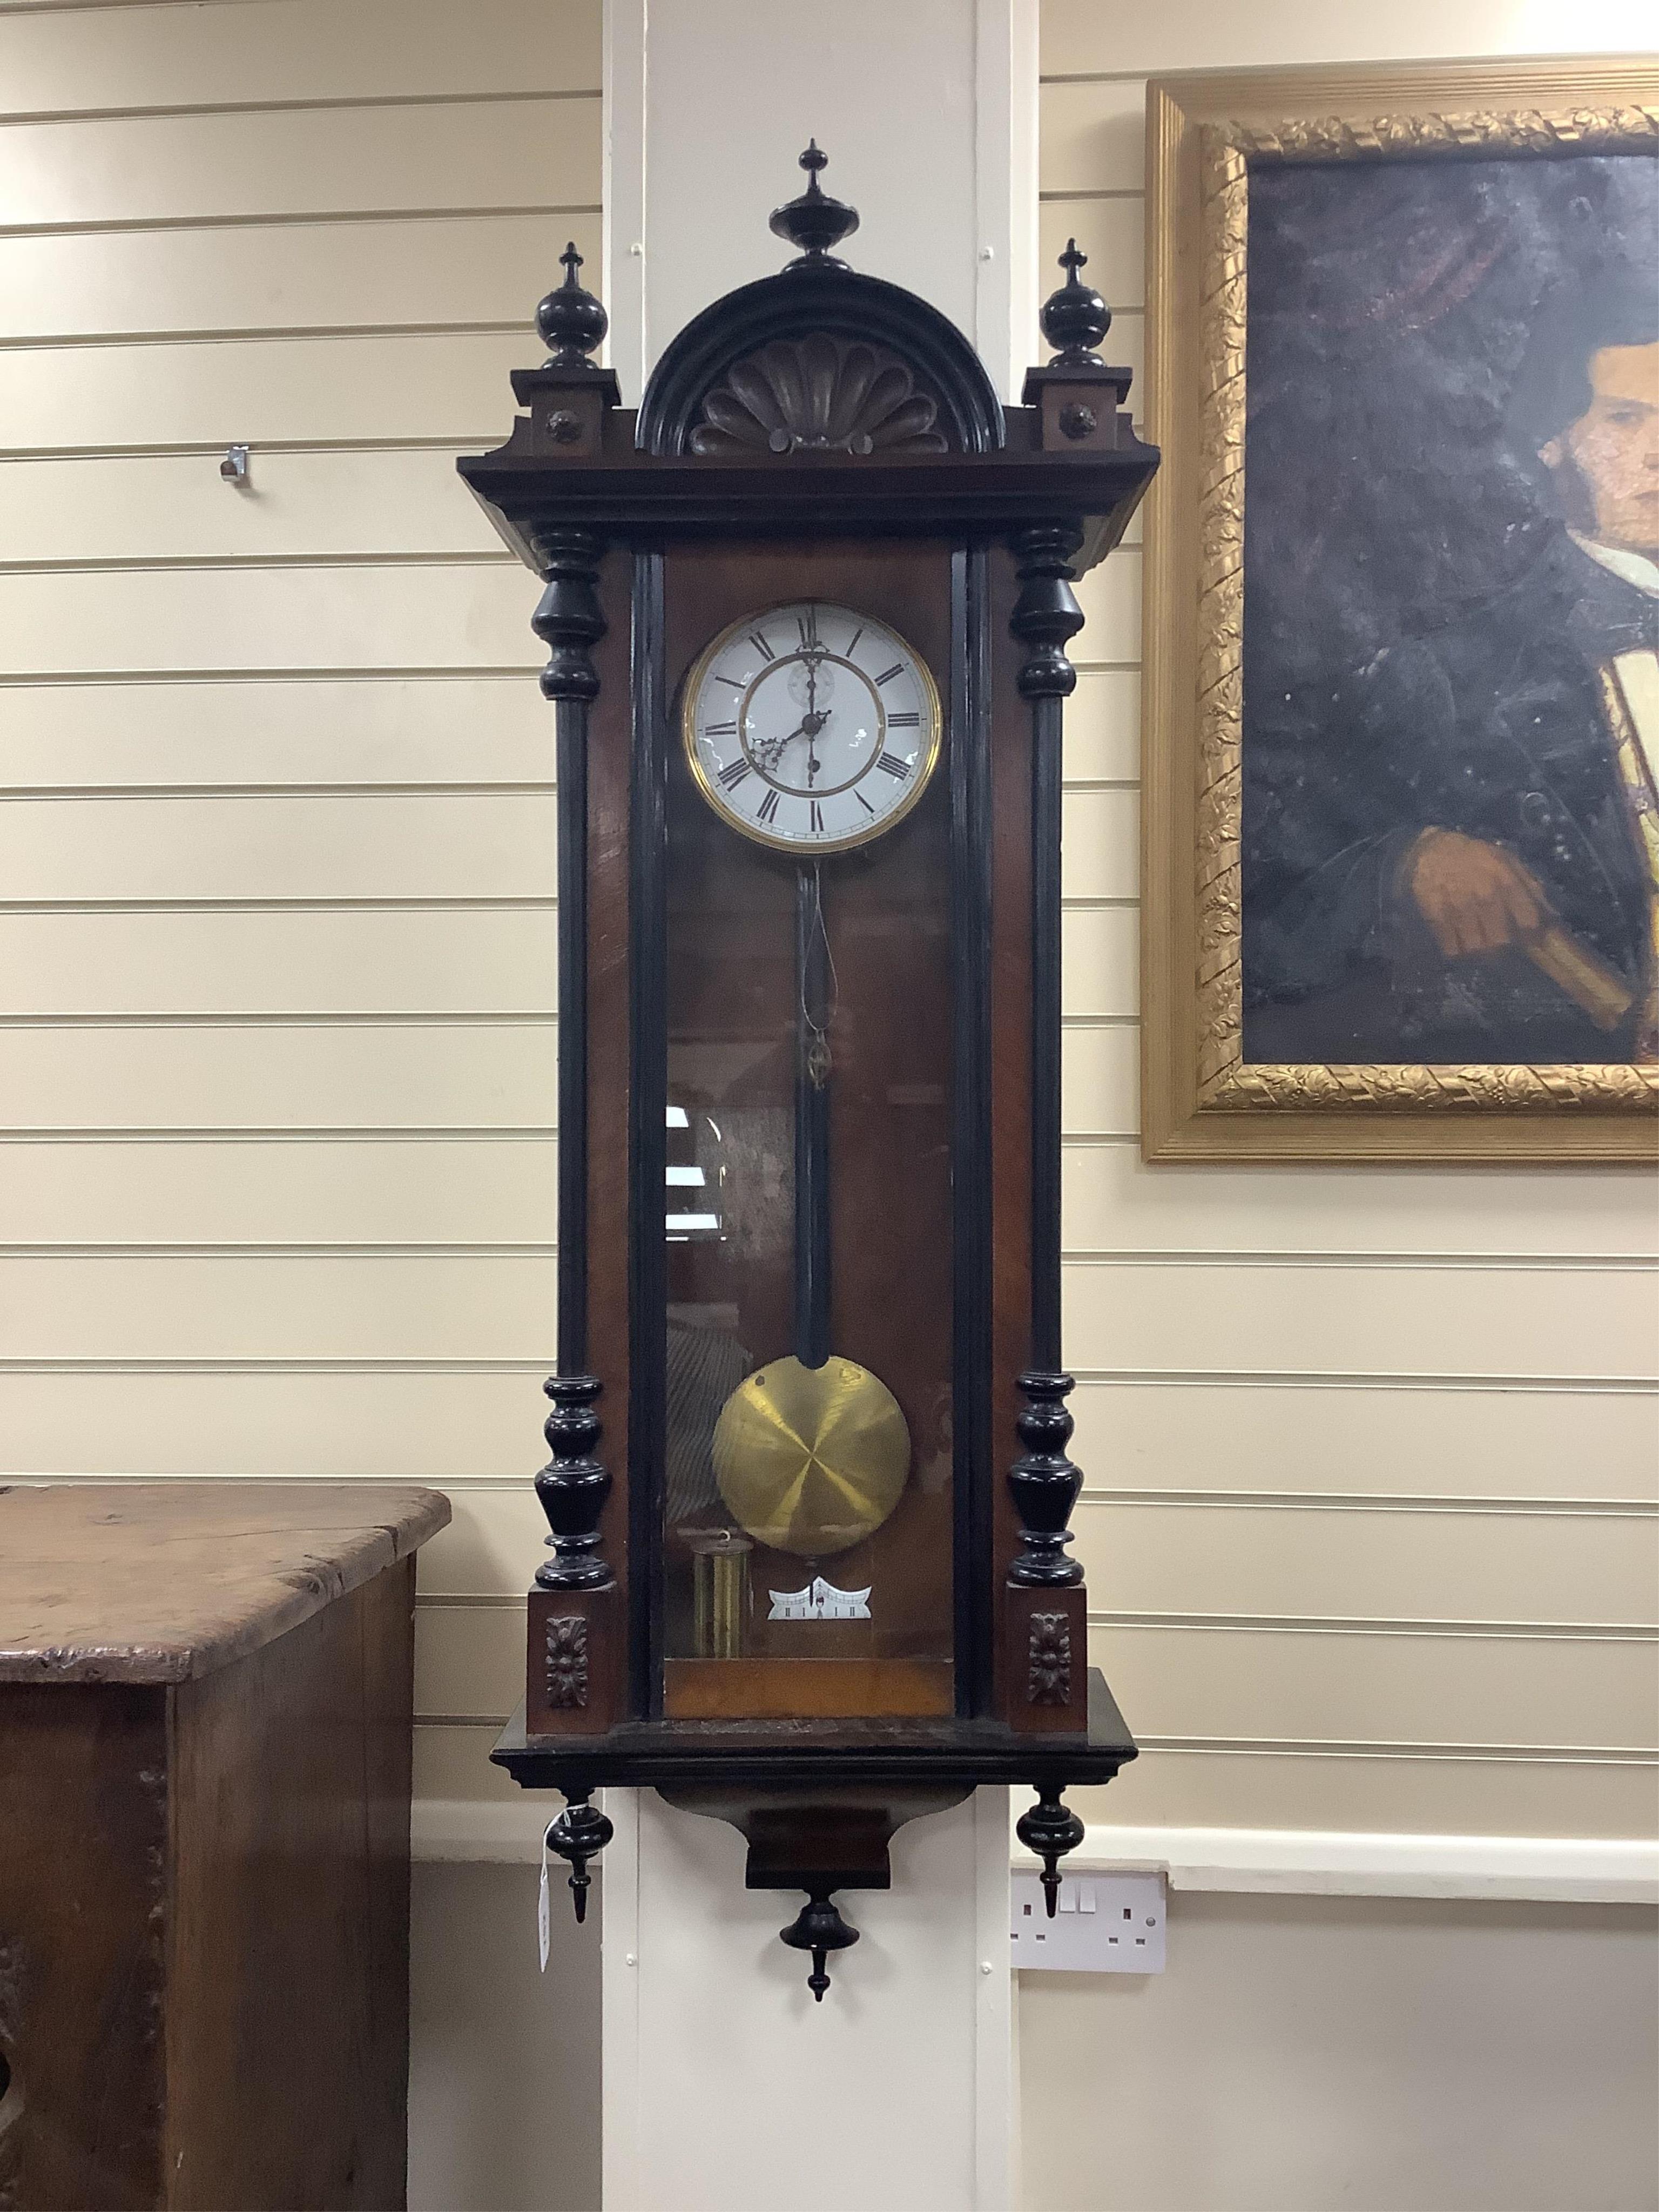 A late 19th century Vienna style regulator wall clock, height 120cm. Condition - fair